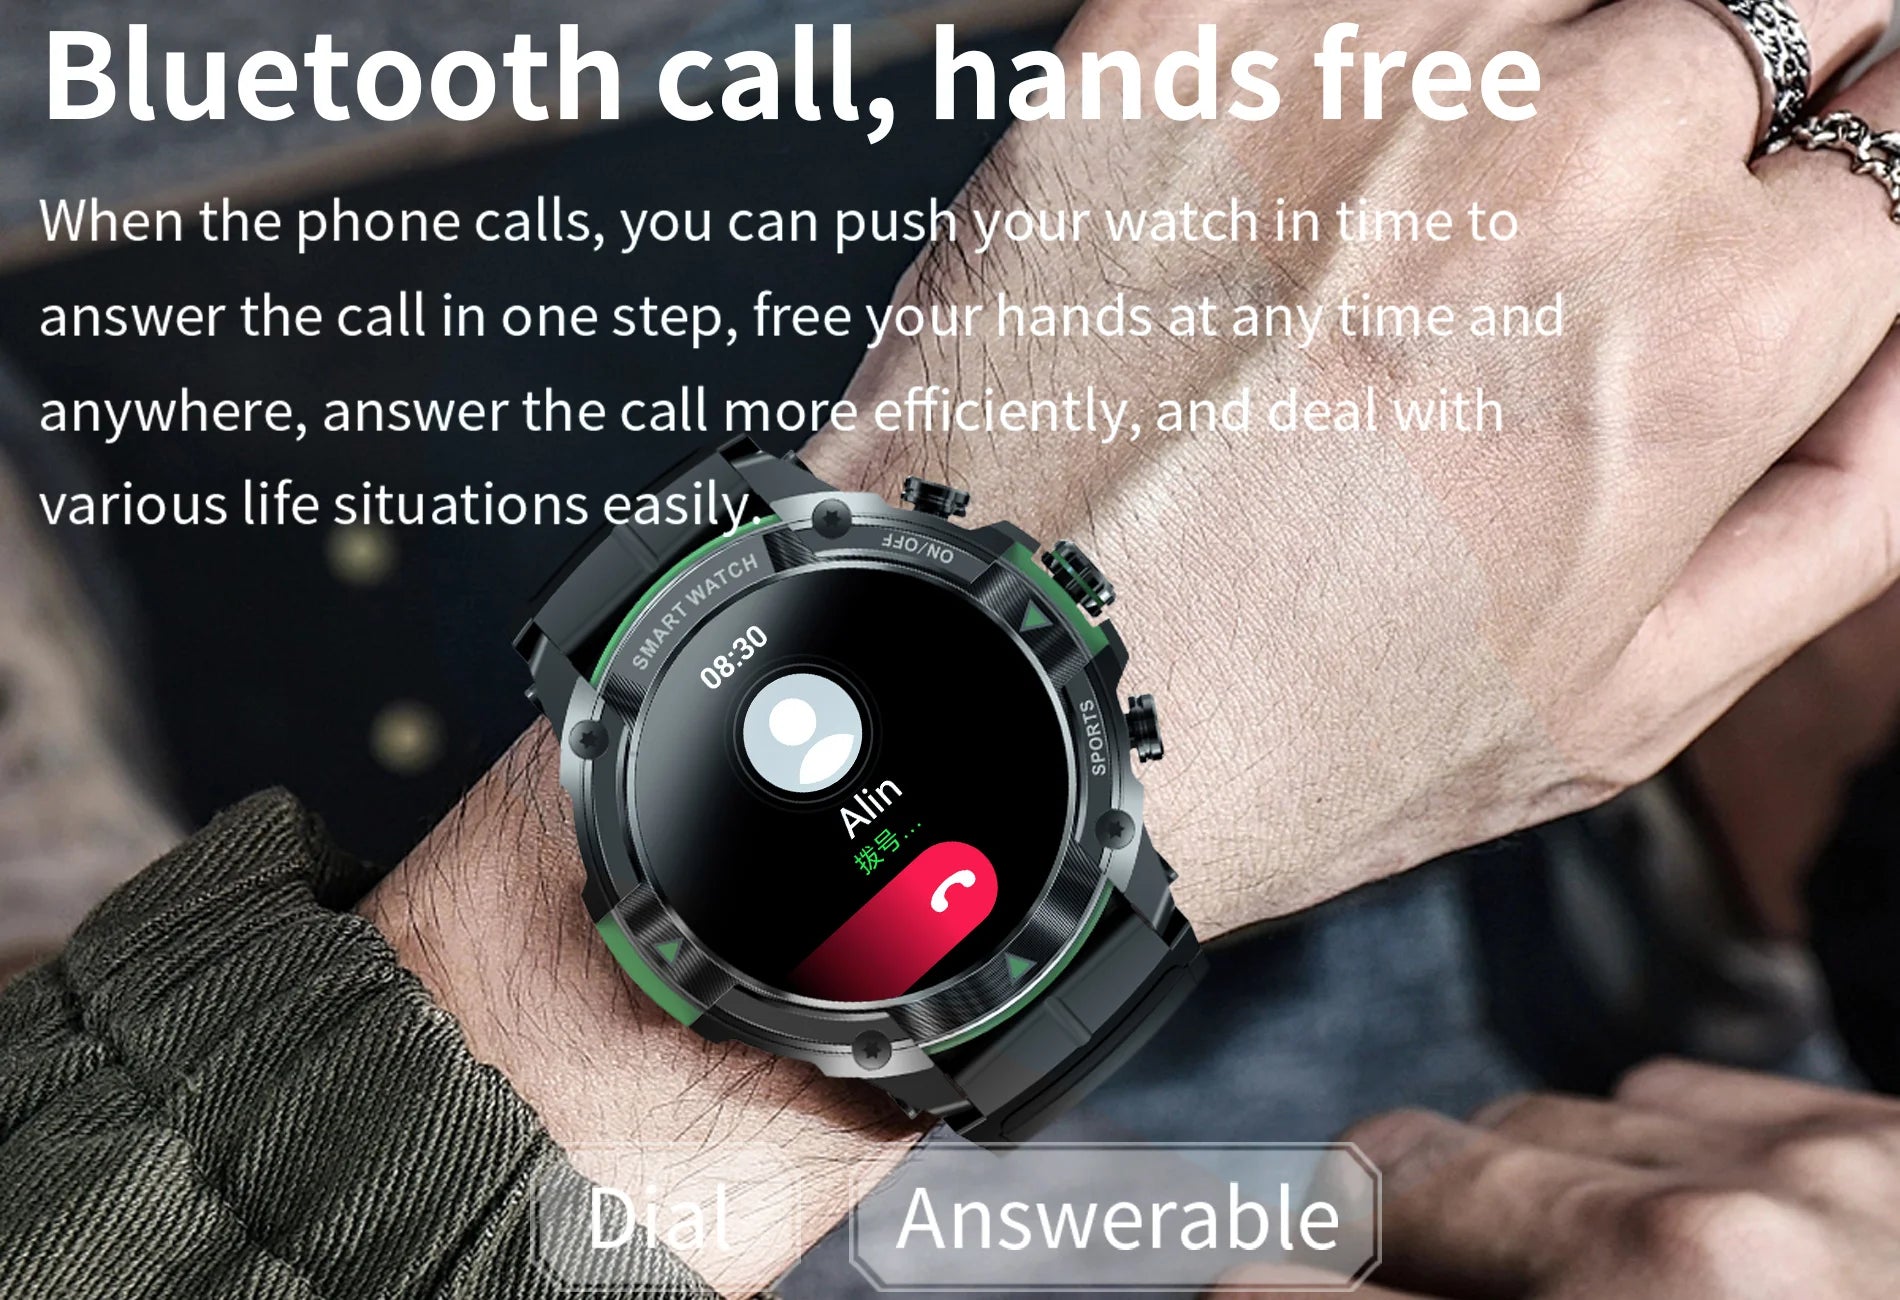 Smart Watch 1.43'' AMOLED Display Bluetooth Call Waterproof Military-Grade Sport Watch - Smart Watch Fun